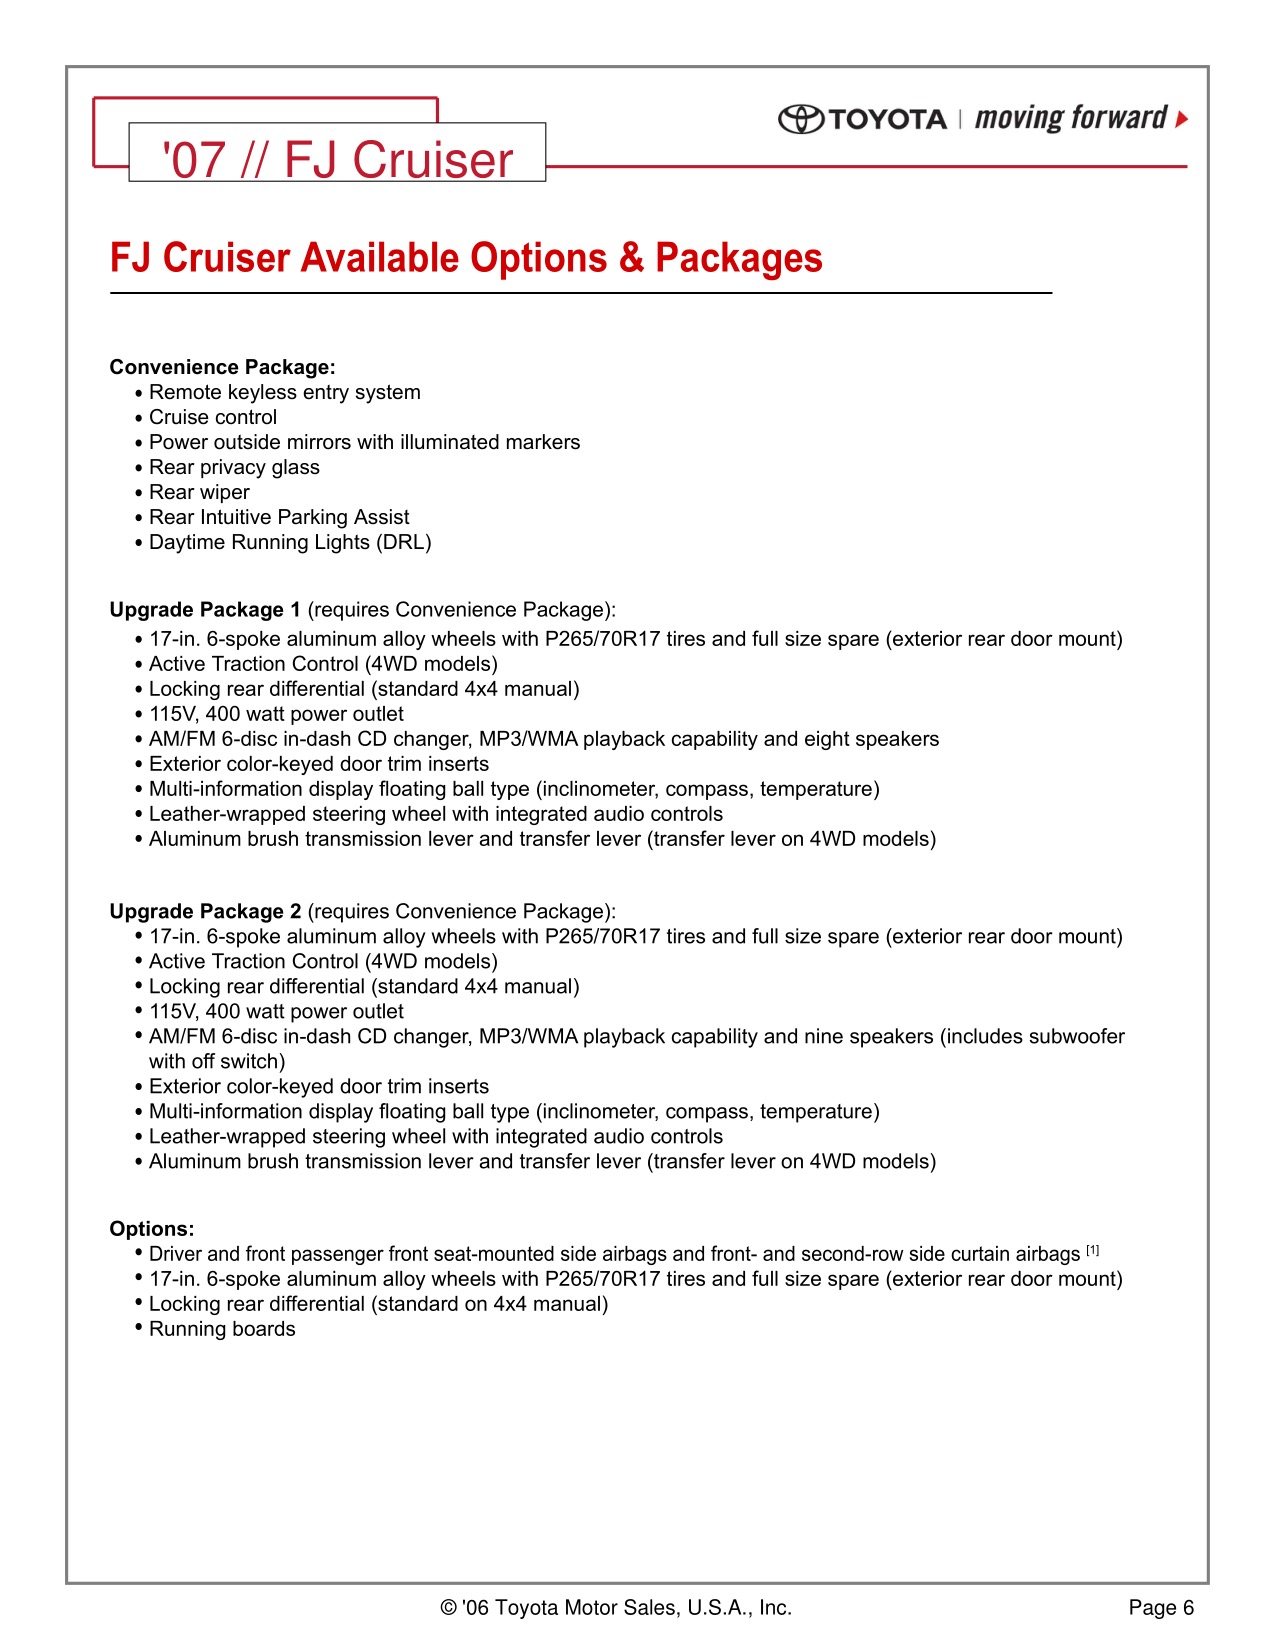 2014 Toyota FJ Cruiser Brochure Page 8